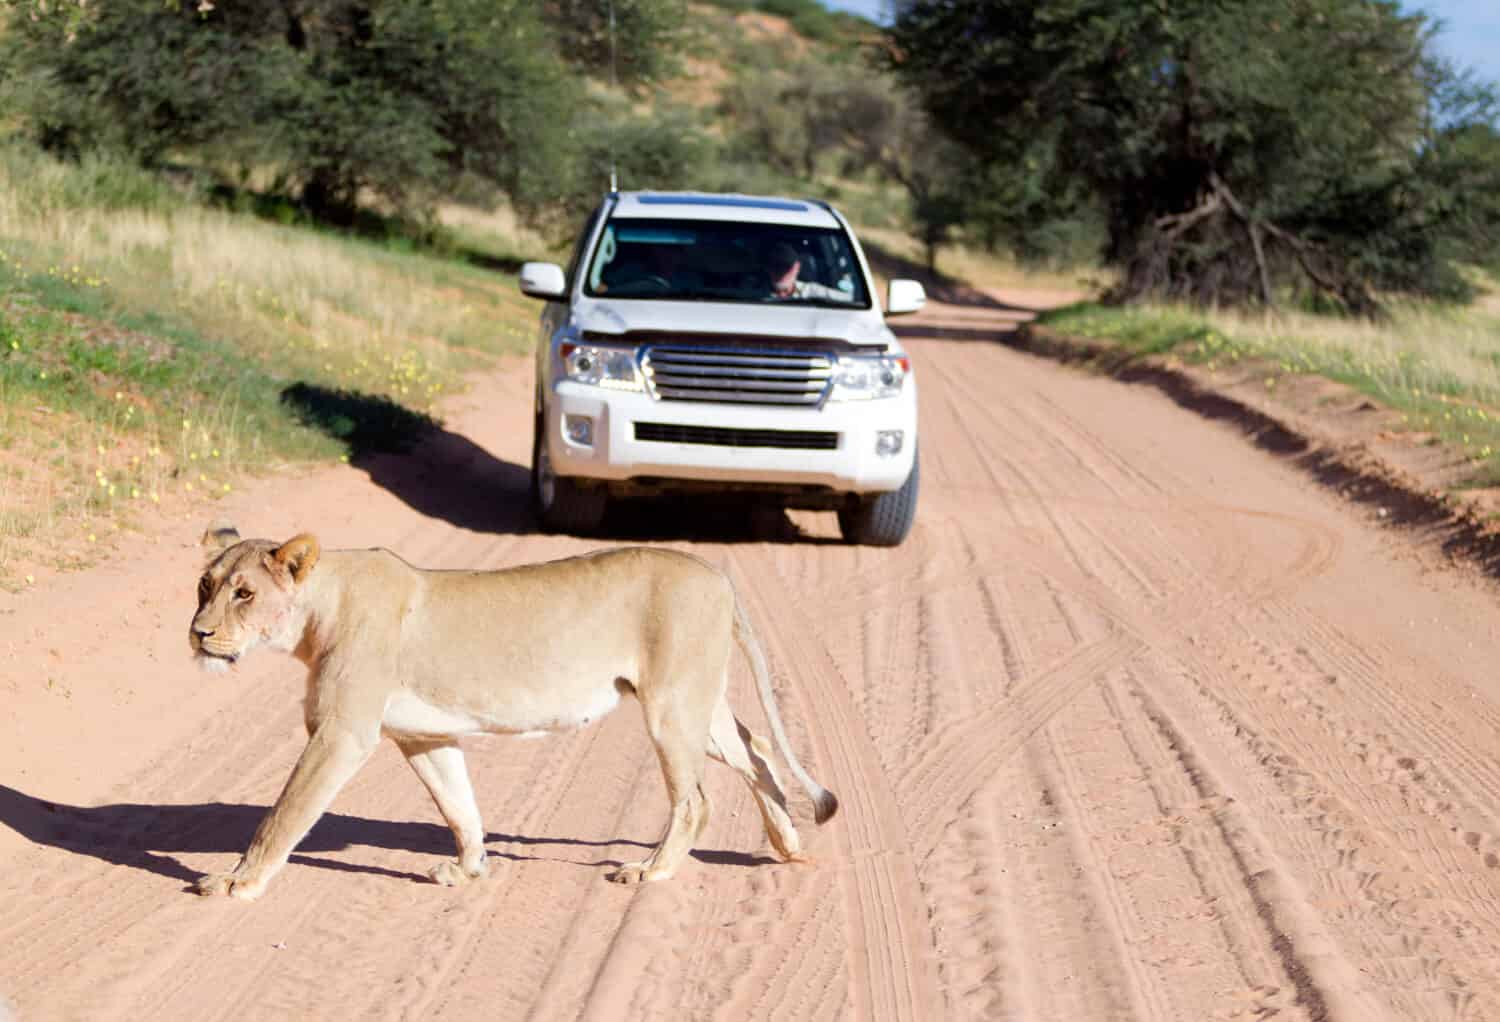 Leone africano (Panthera leo) - Femmina, nella strada di ghiaia, Parco transfrontaliero di Kgalagadi, deserto del Kalahari, Sud Africa.